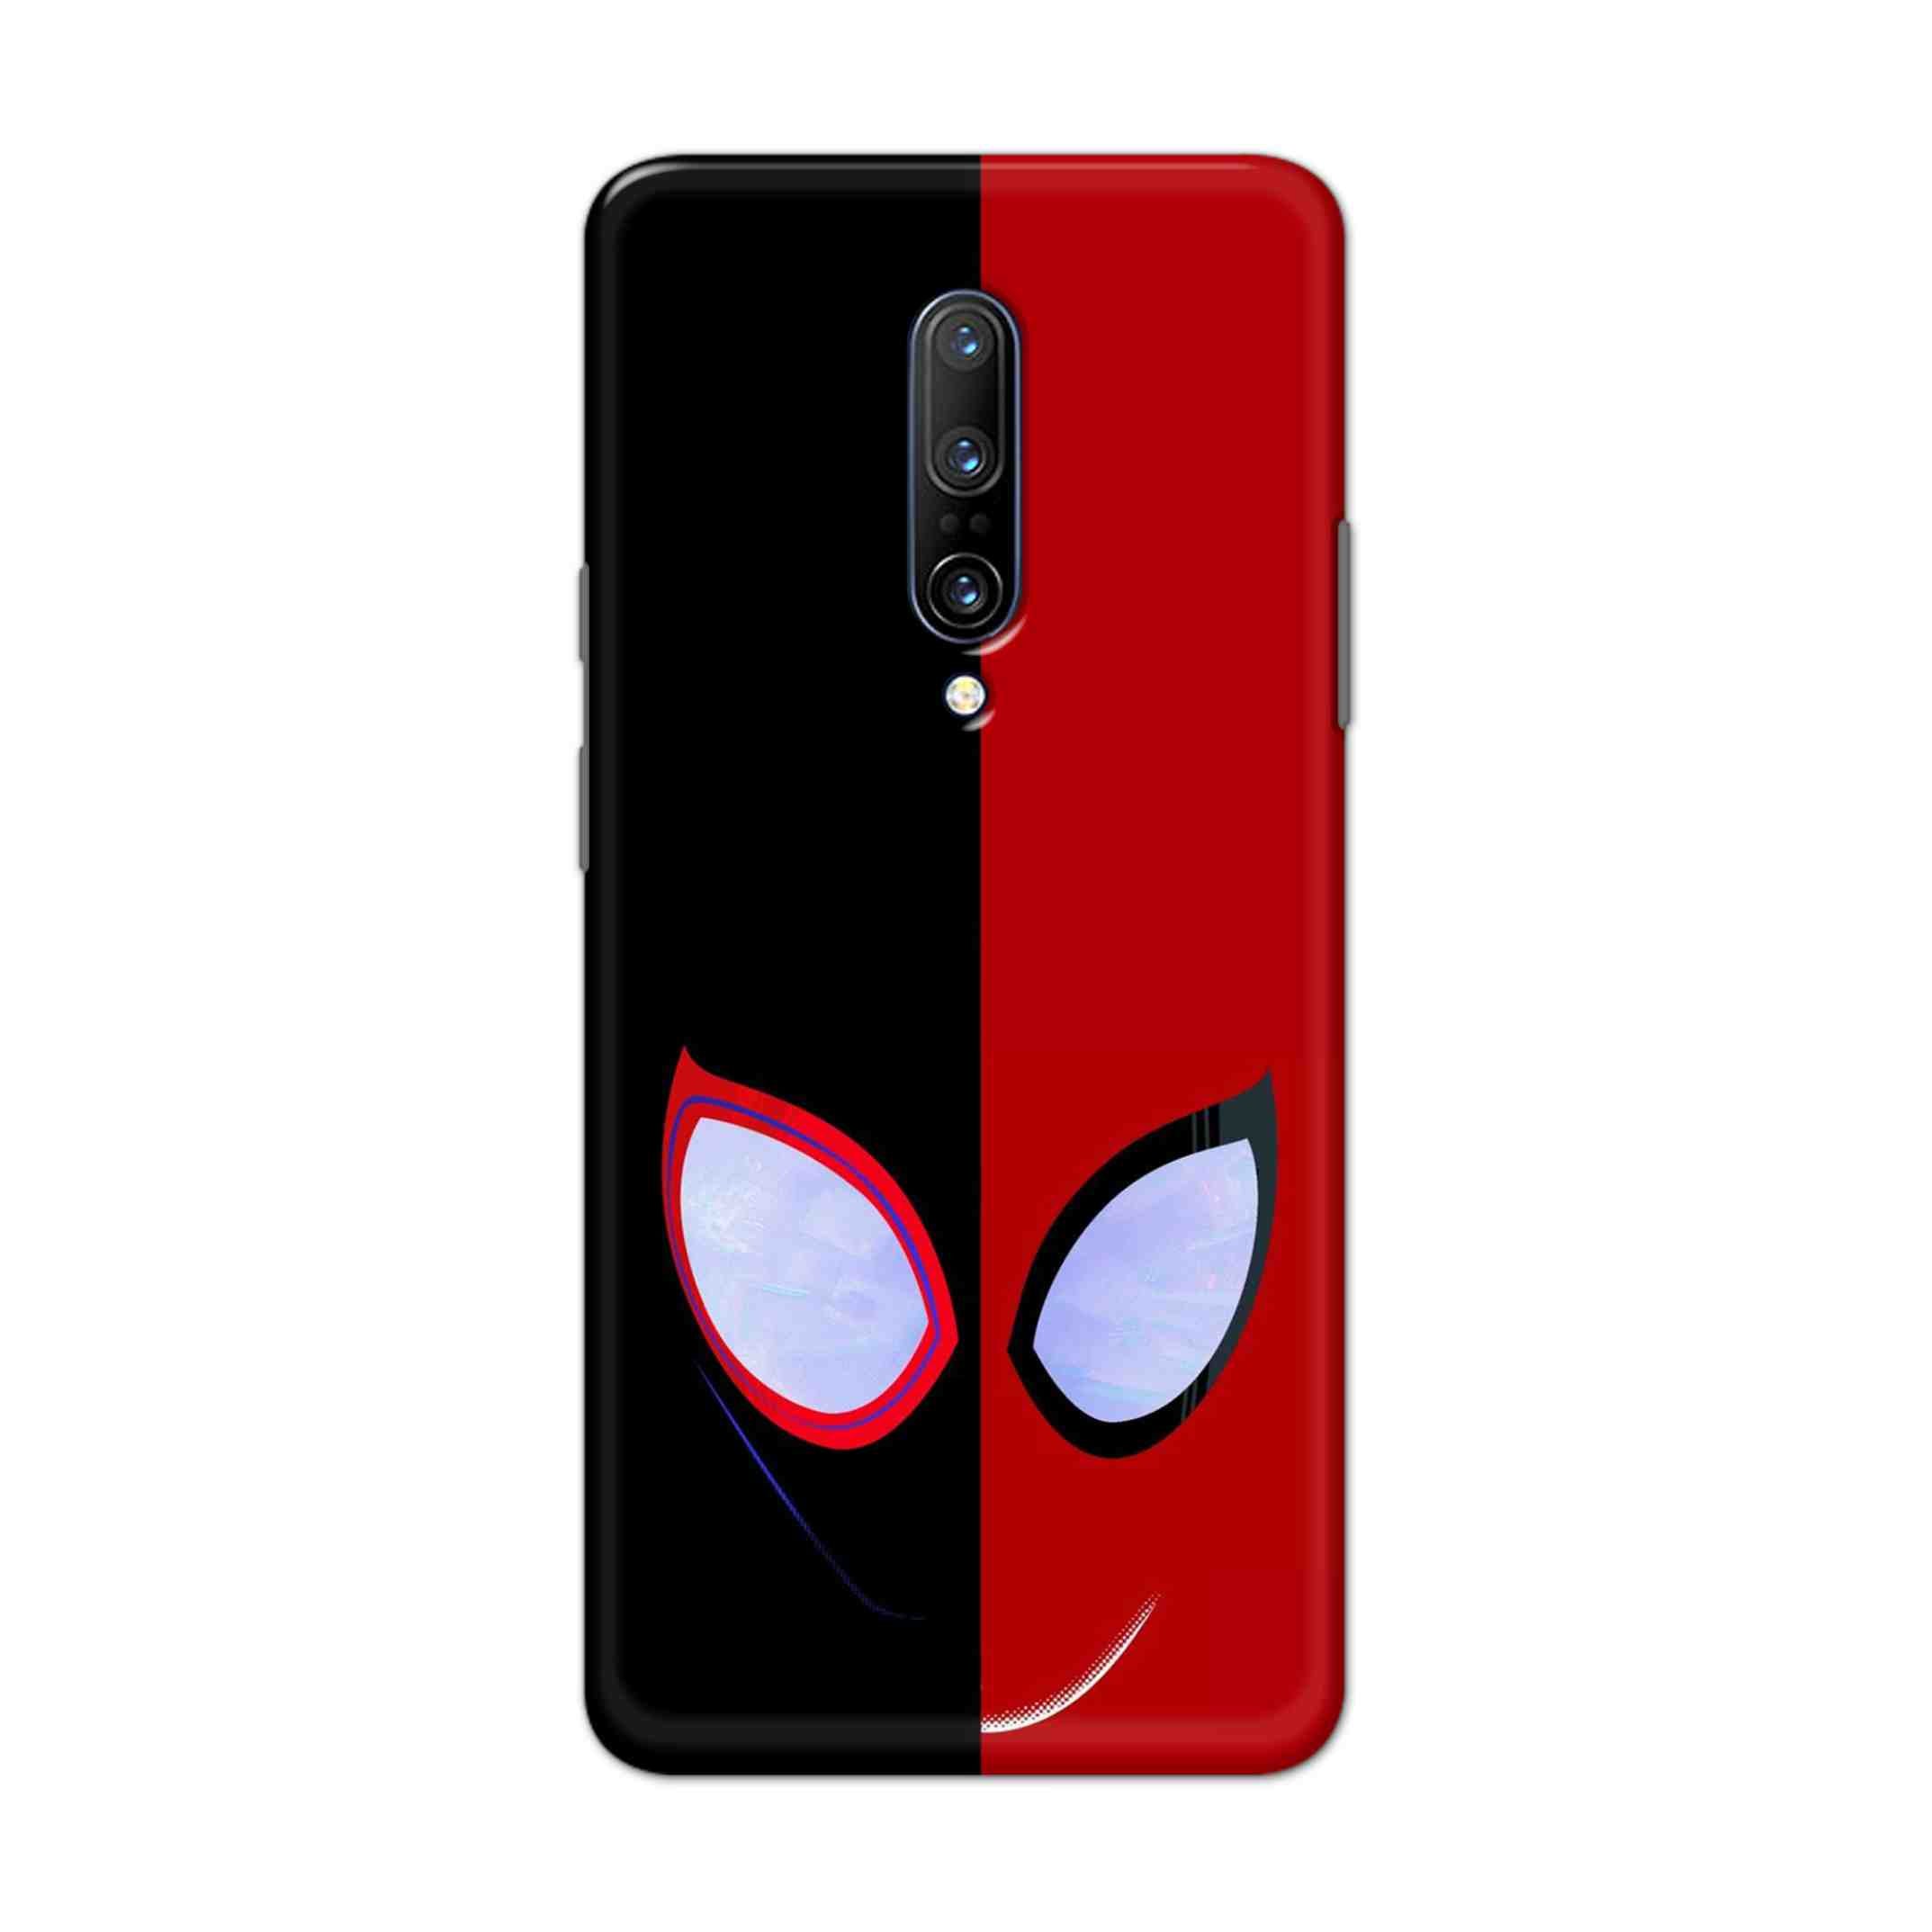 Buy Venom Vs Spiderman Hard Back Mobile Phone Case Cover For OnePlus 7 Pro Online